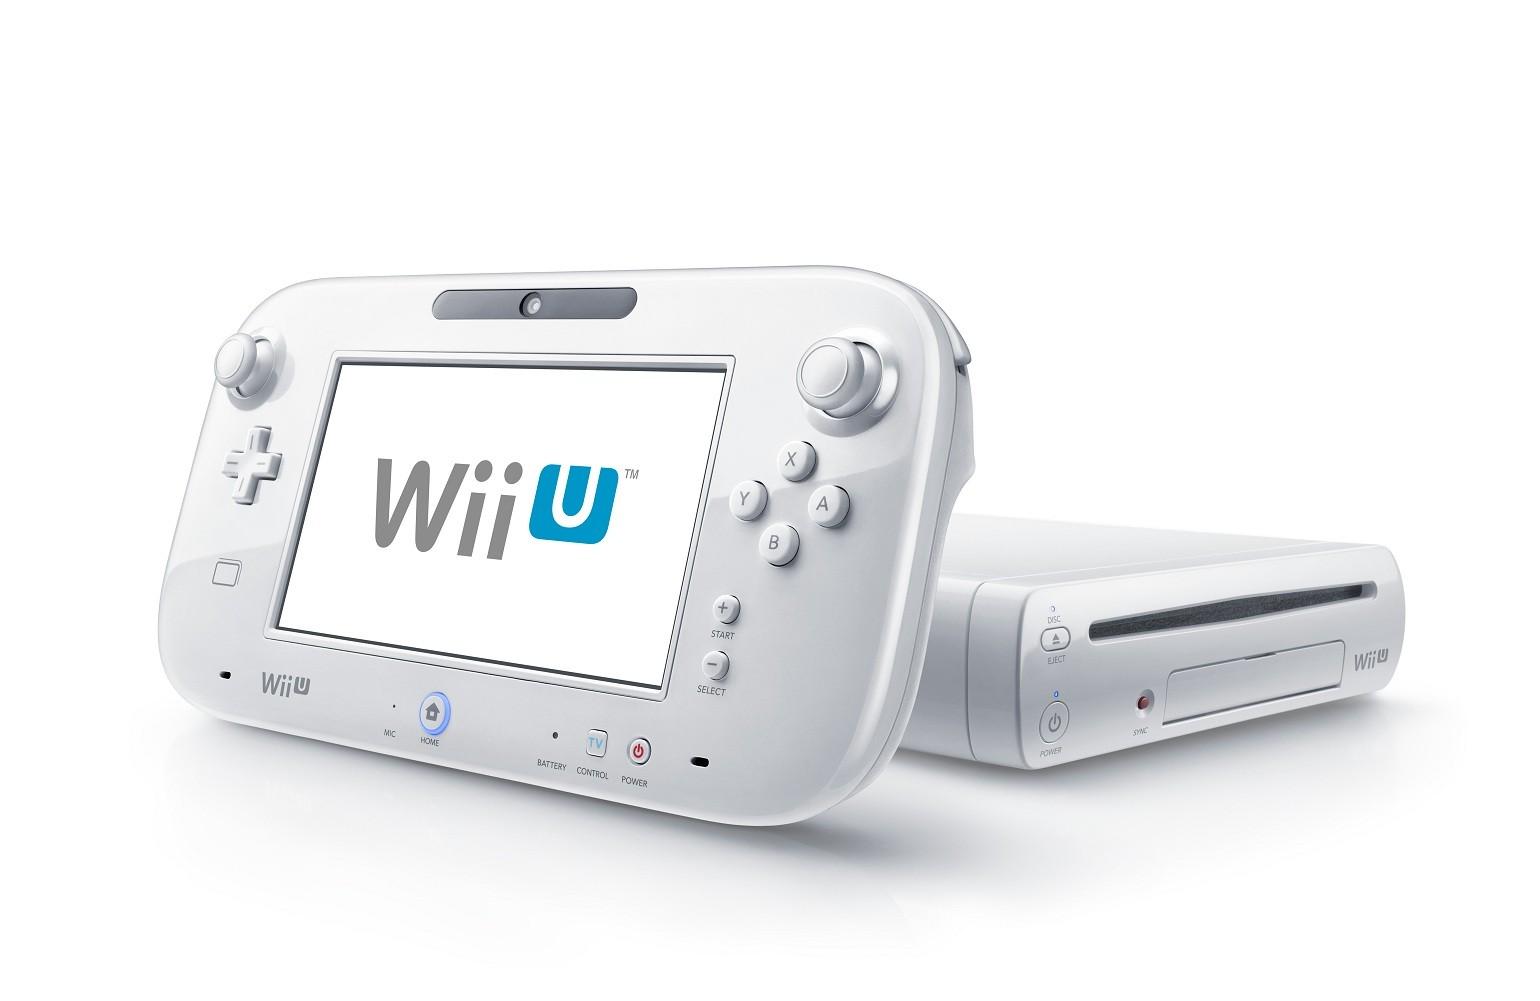 GameCube Vs. Wii U – software release comparison